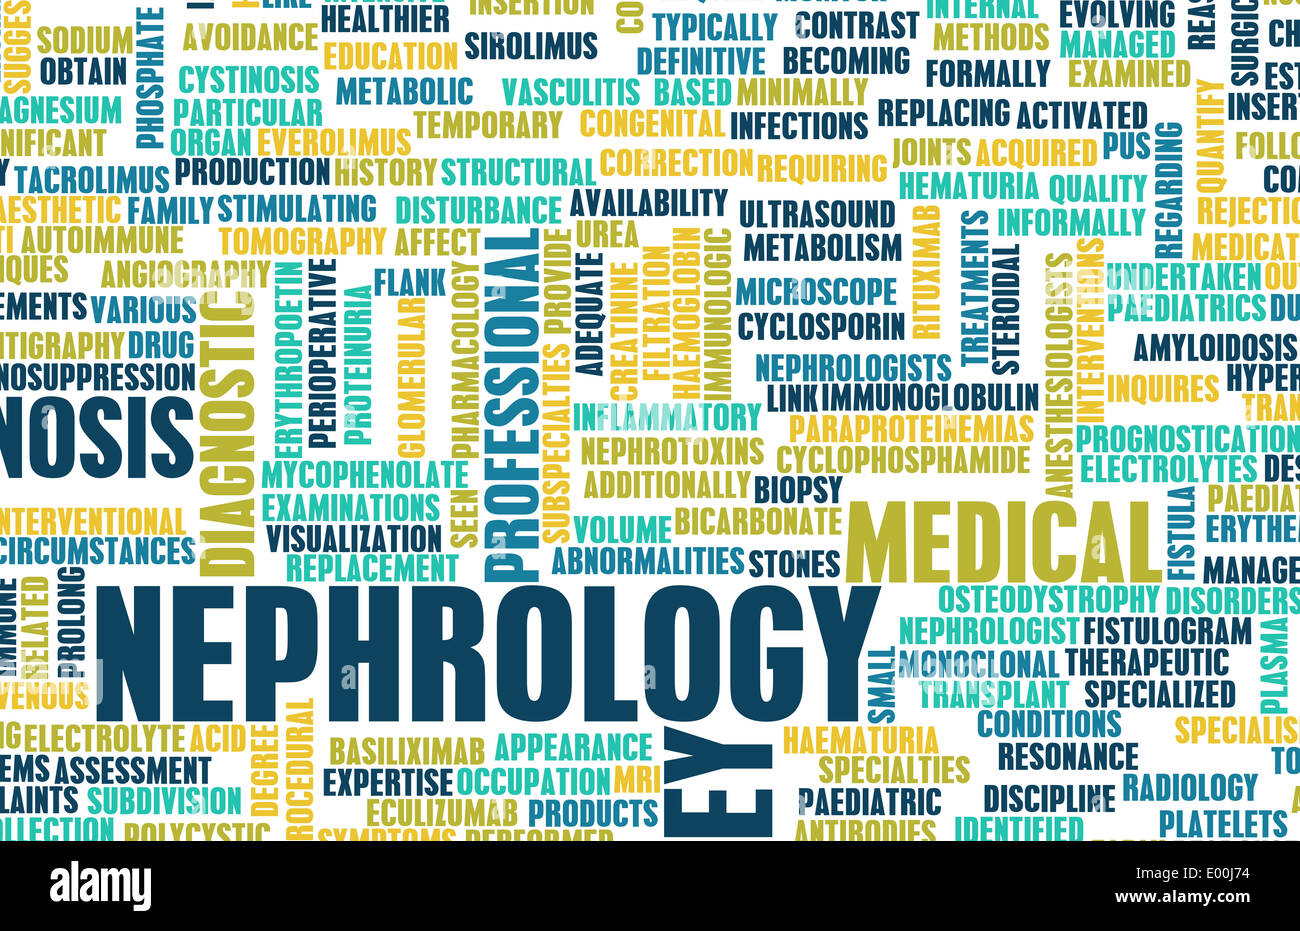 Nephrology or Nephrologist Medical Field of Science Art Stock Photo